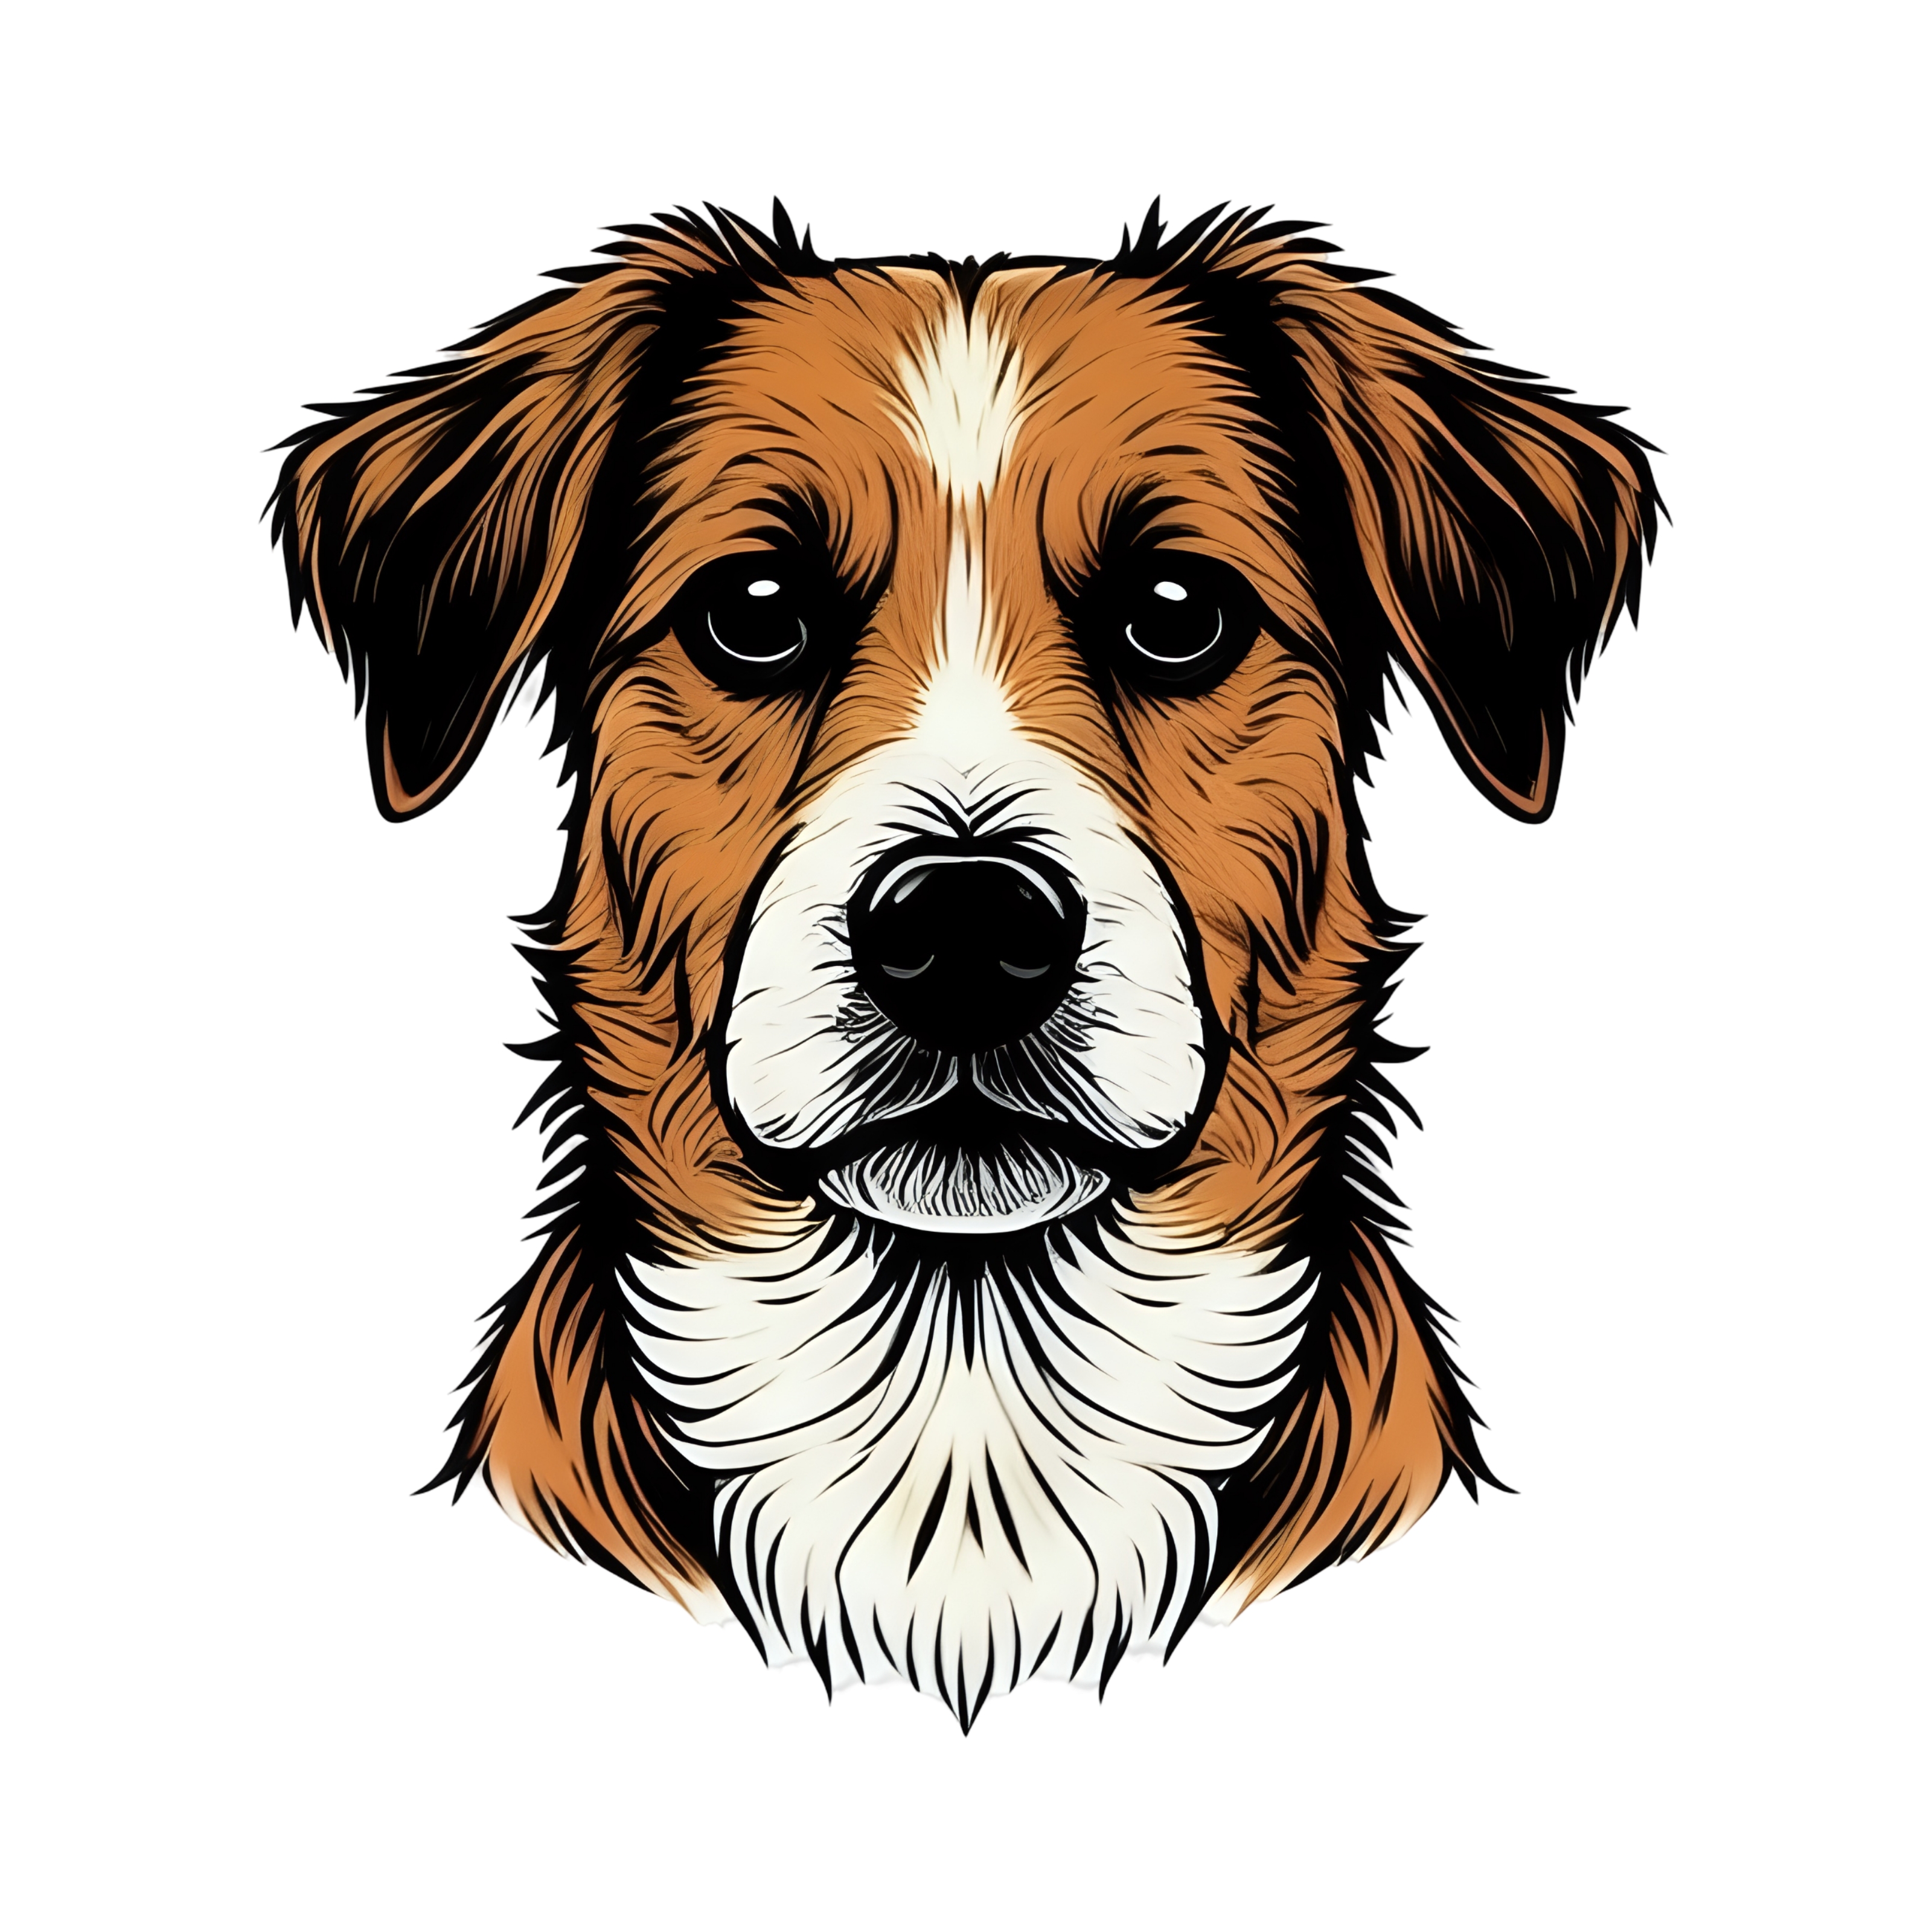 Dog head graphic design